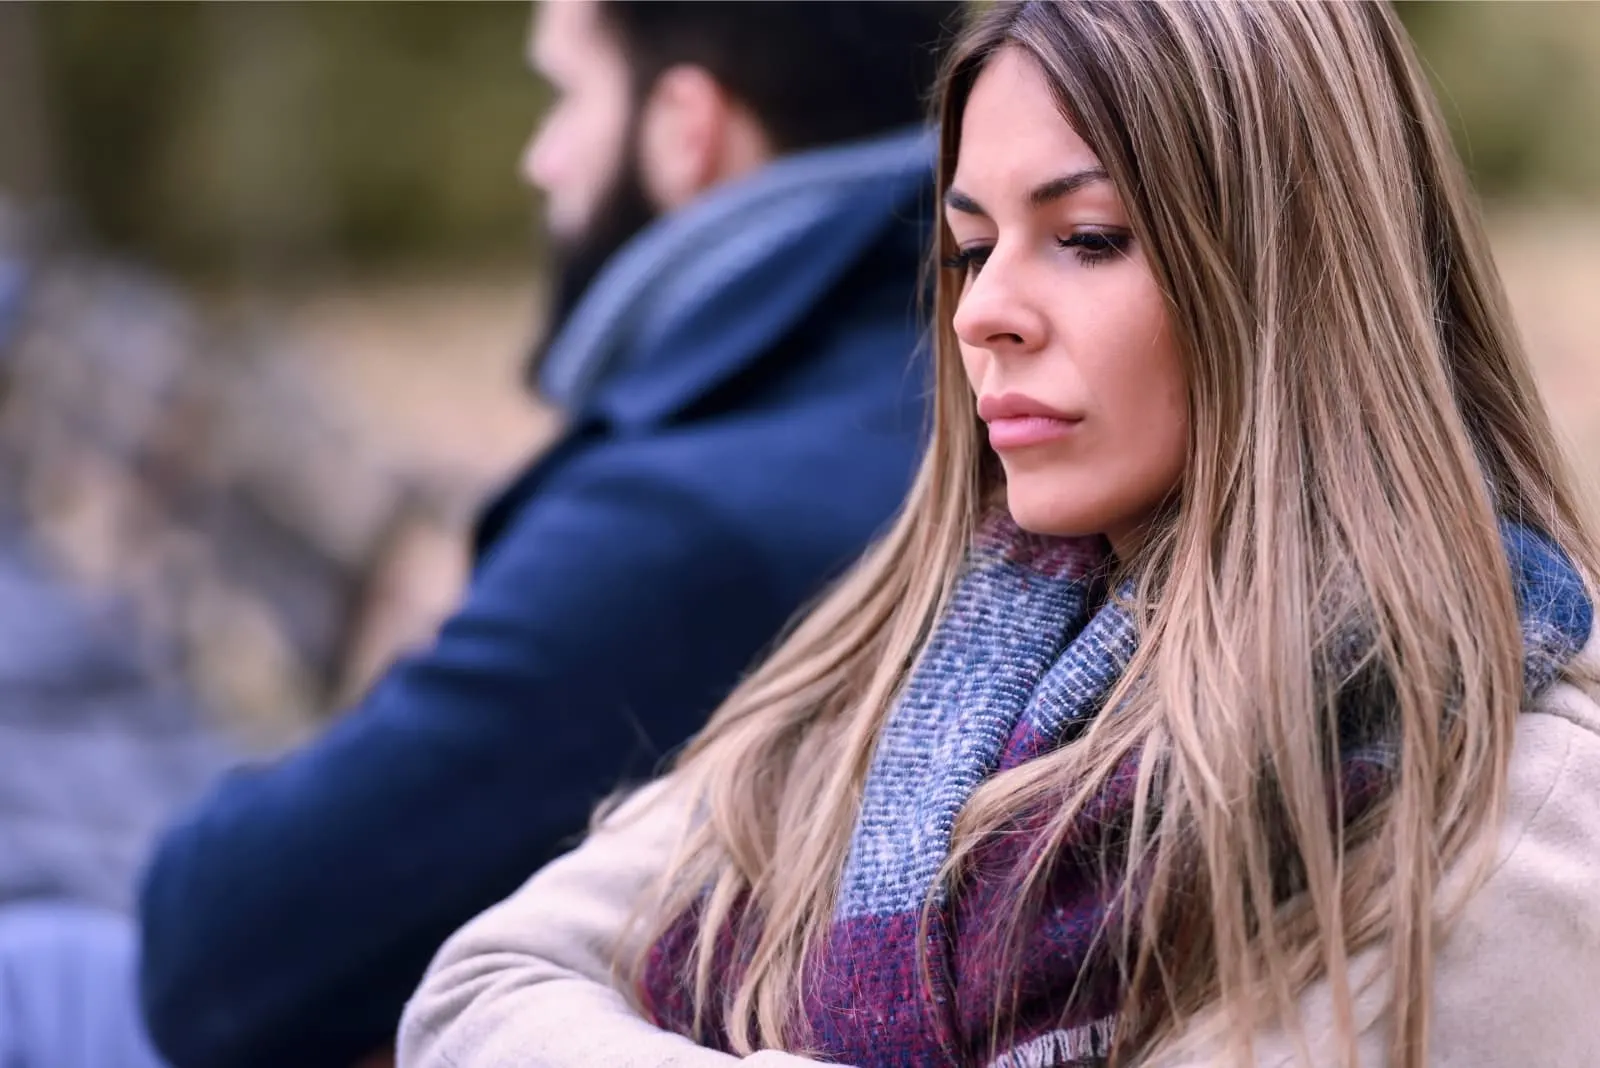 sad woman with scarf sitting near man outdoor